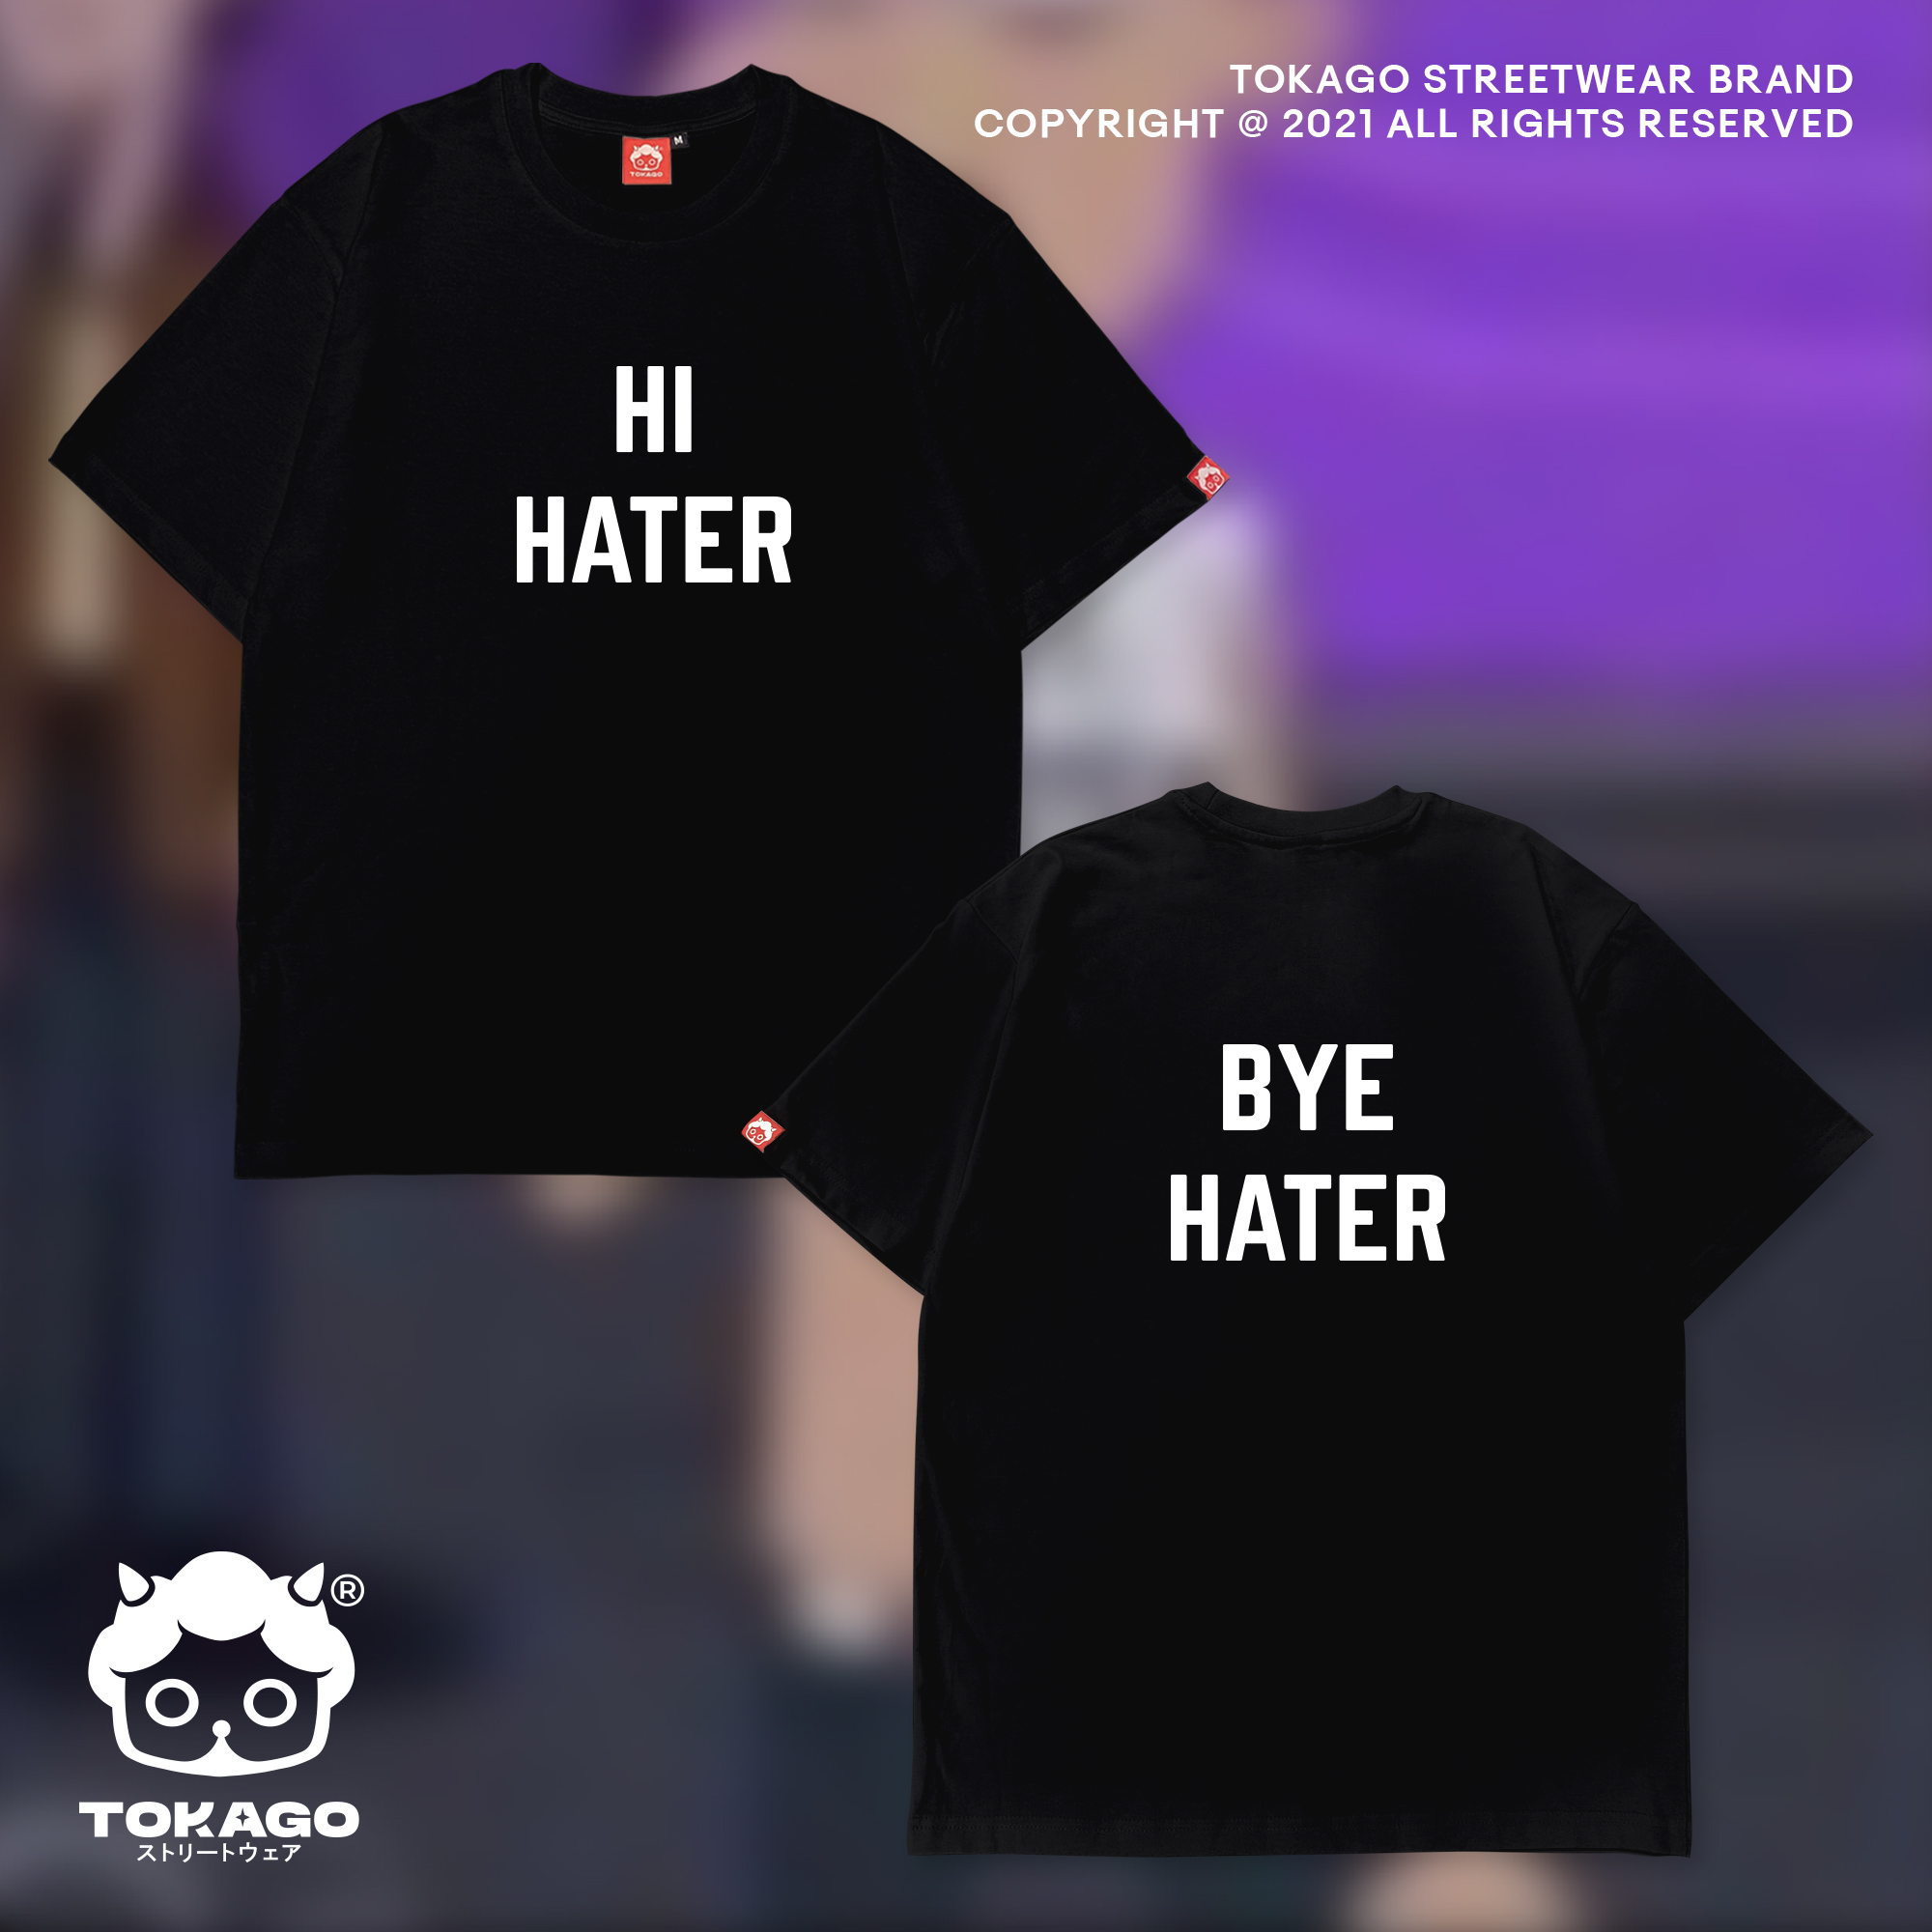 BYE HATER Tshirt